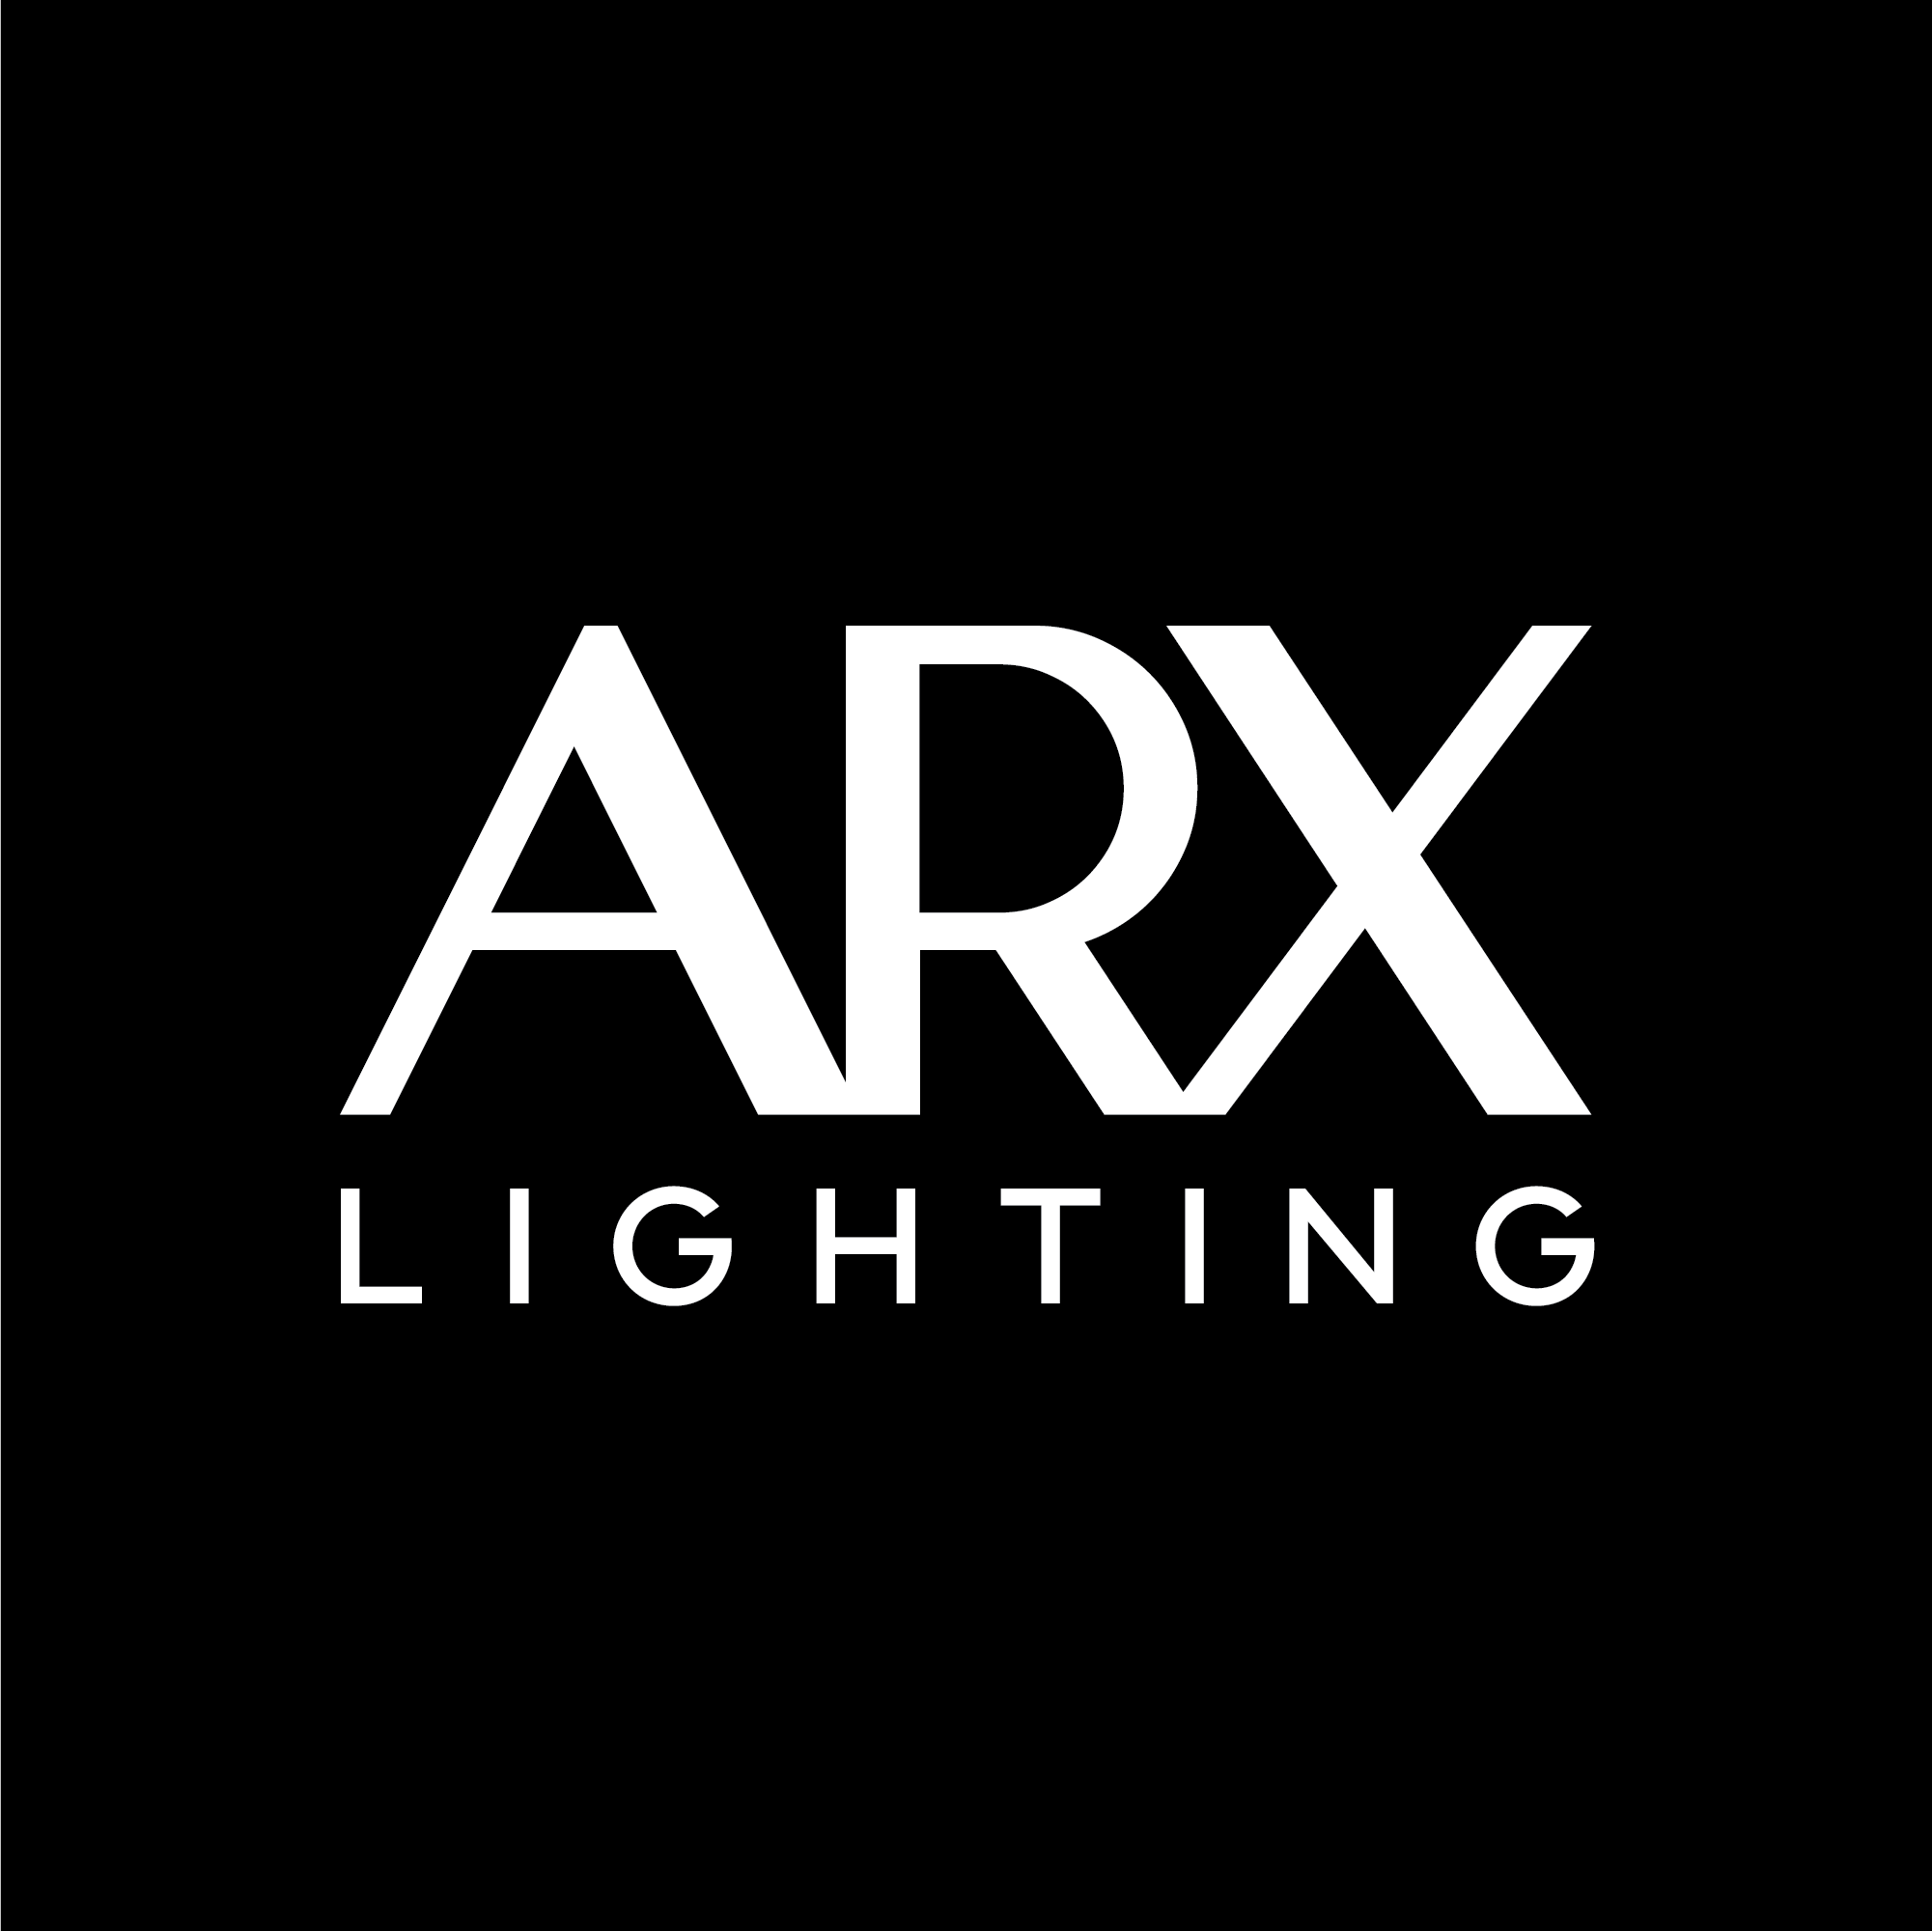 Introducing ARX Lighting